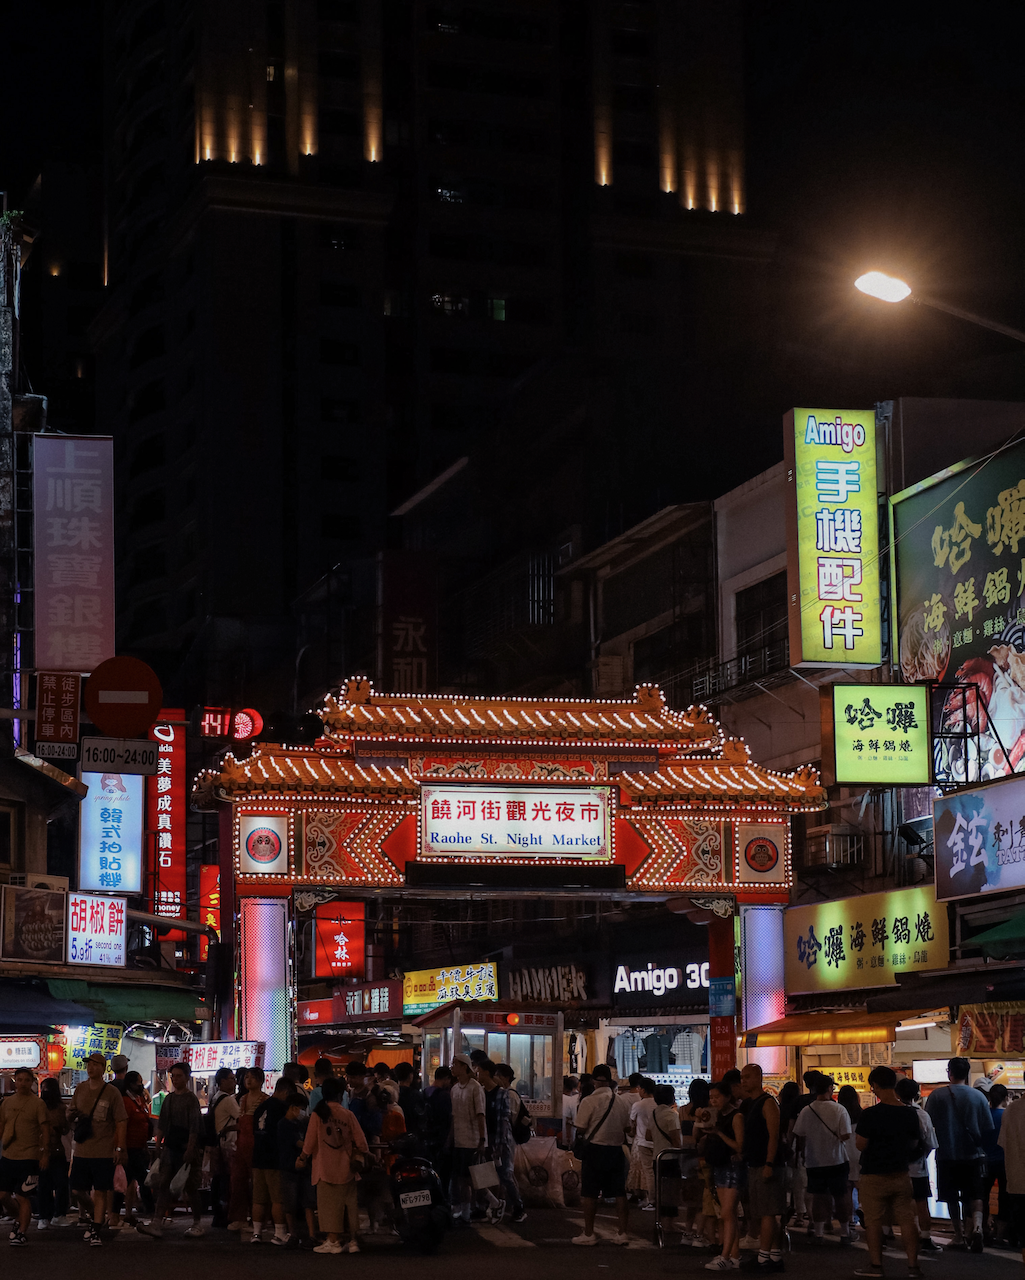 Marché de nuit de Raohe St - Taipei - Taïwan